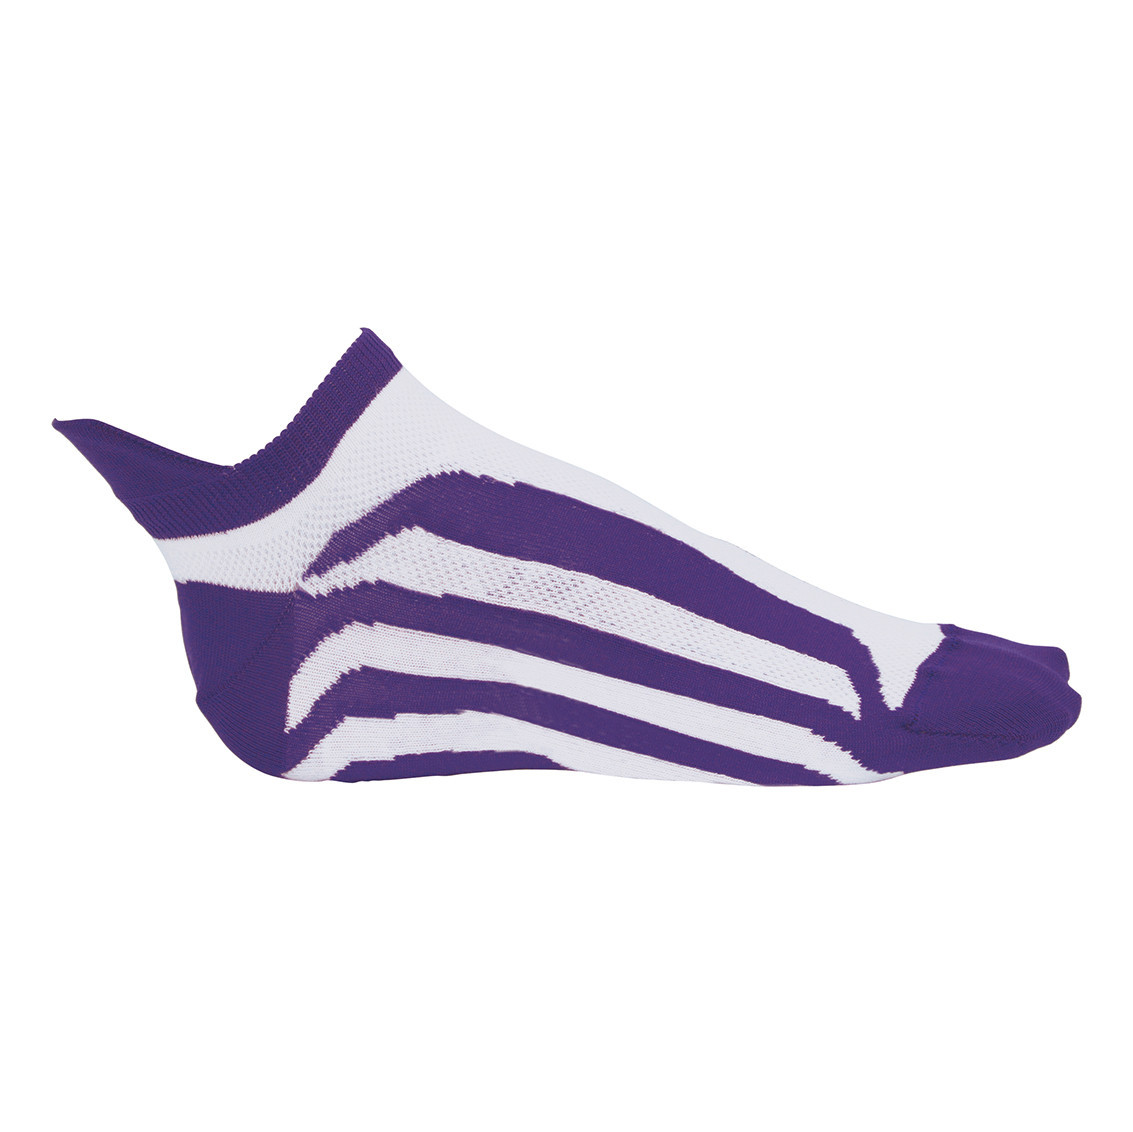 Professional Technical Socks Size Large violet